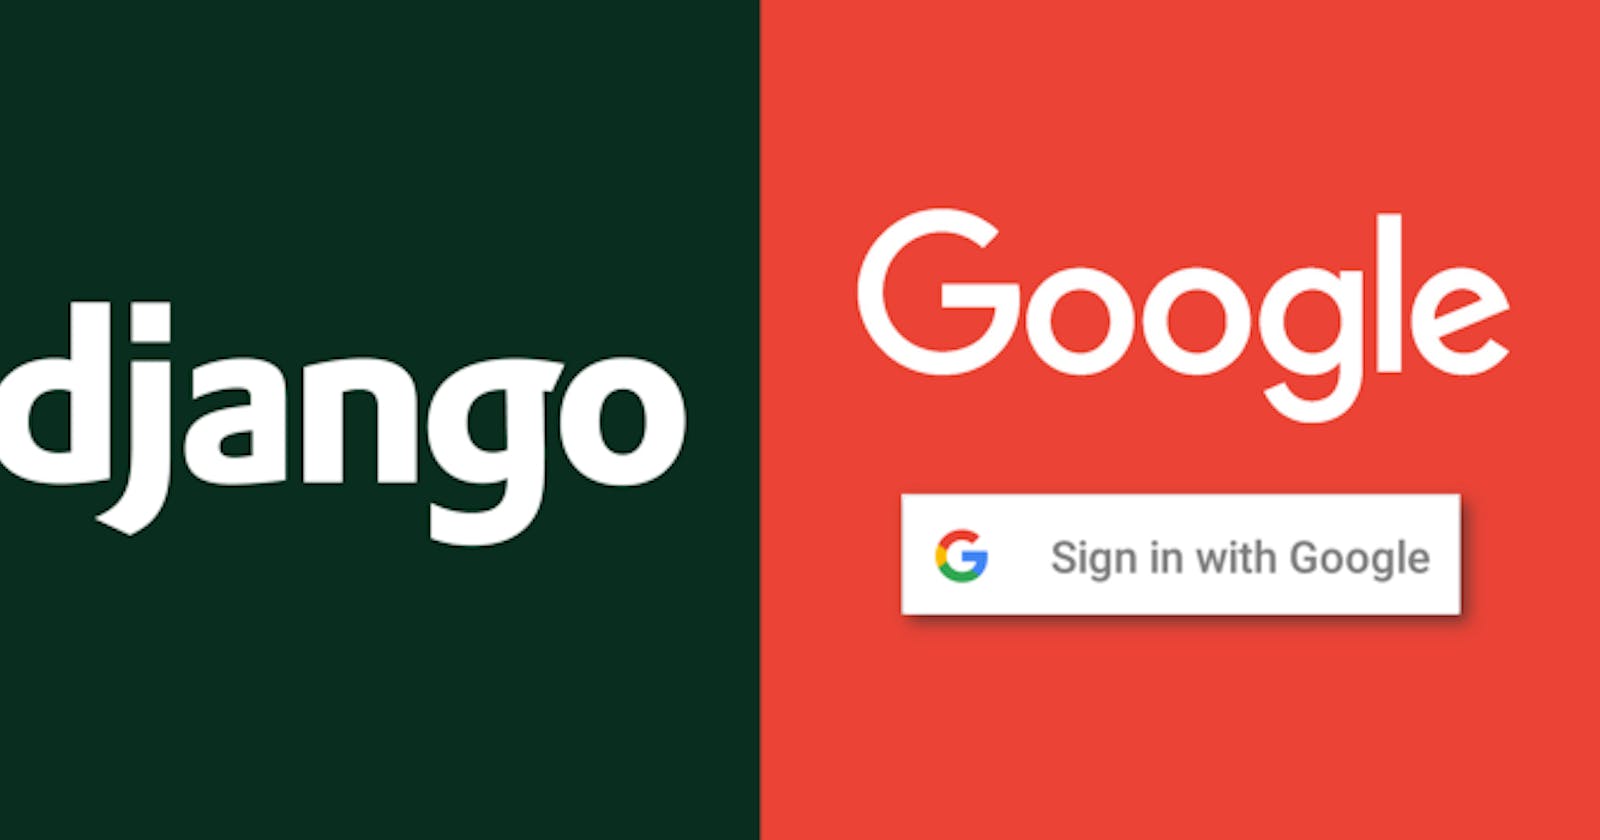 Django Google Authentication using django-allauth